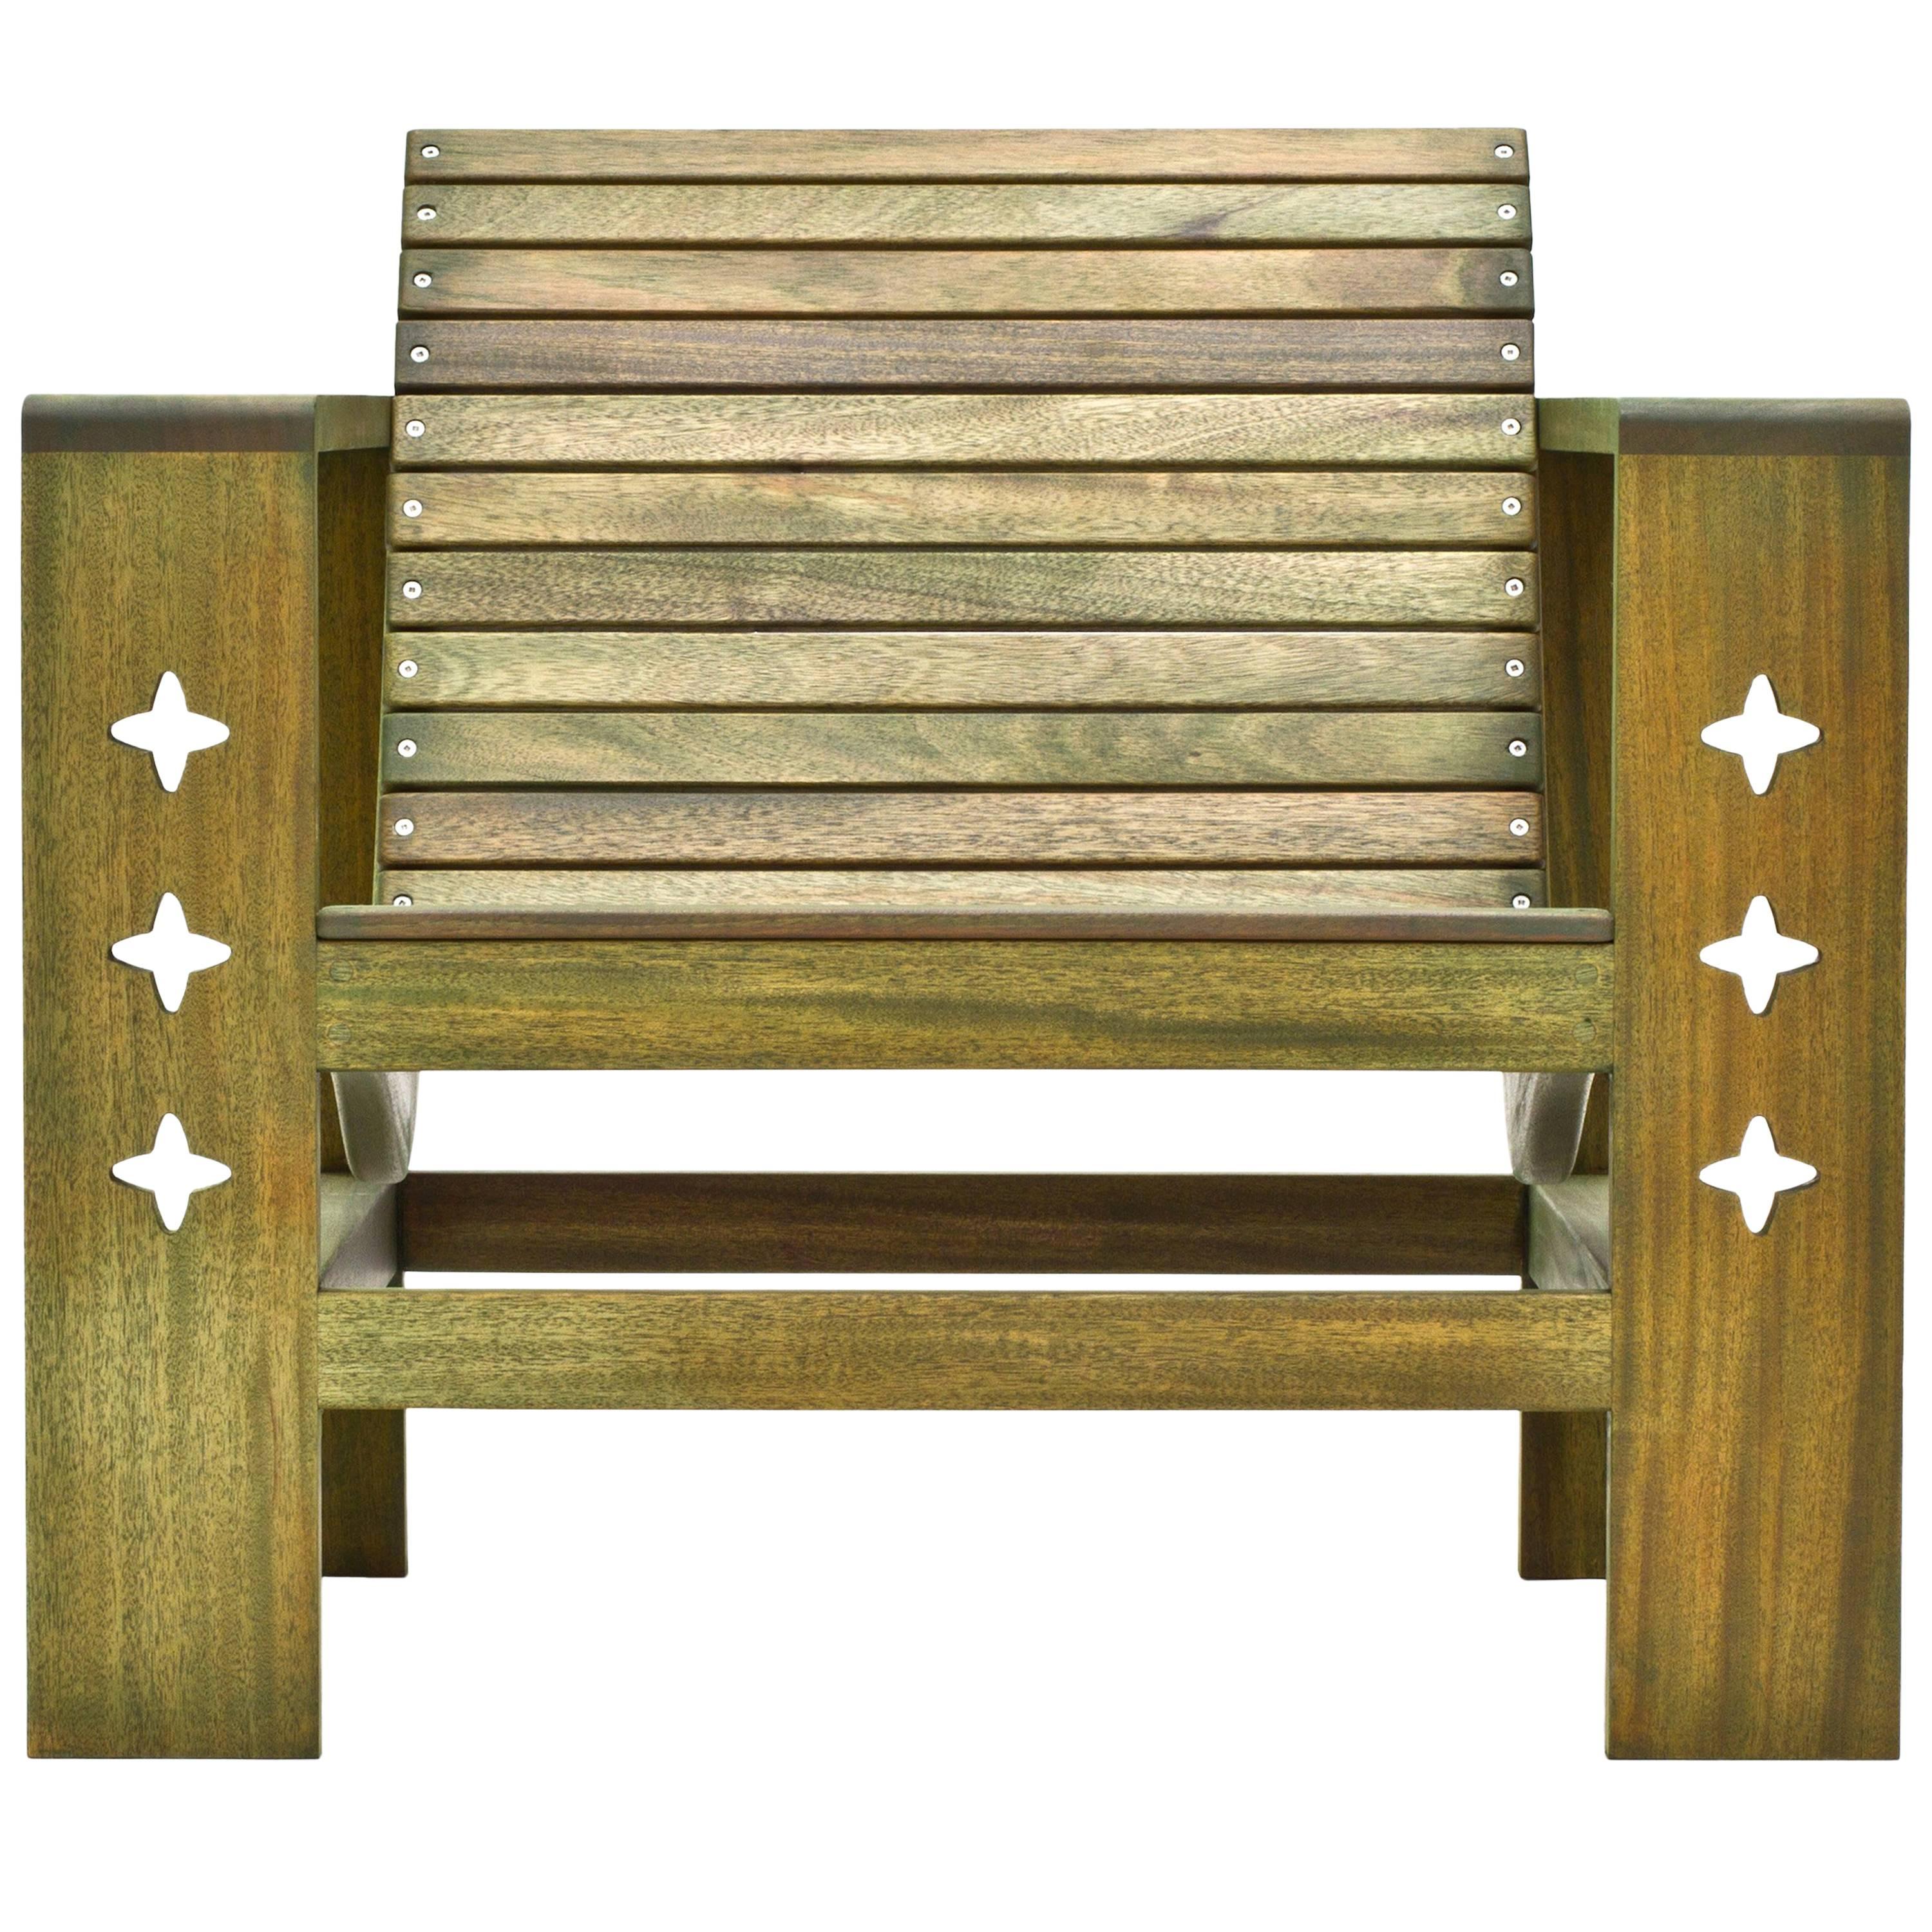 Uti 'Ooh-Tee' Lounge Chair in Mahogany with Sage Finish, Wooda Original